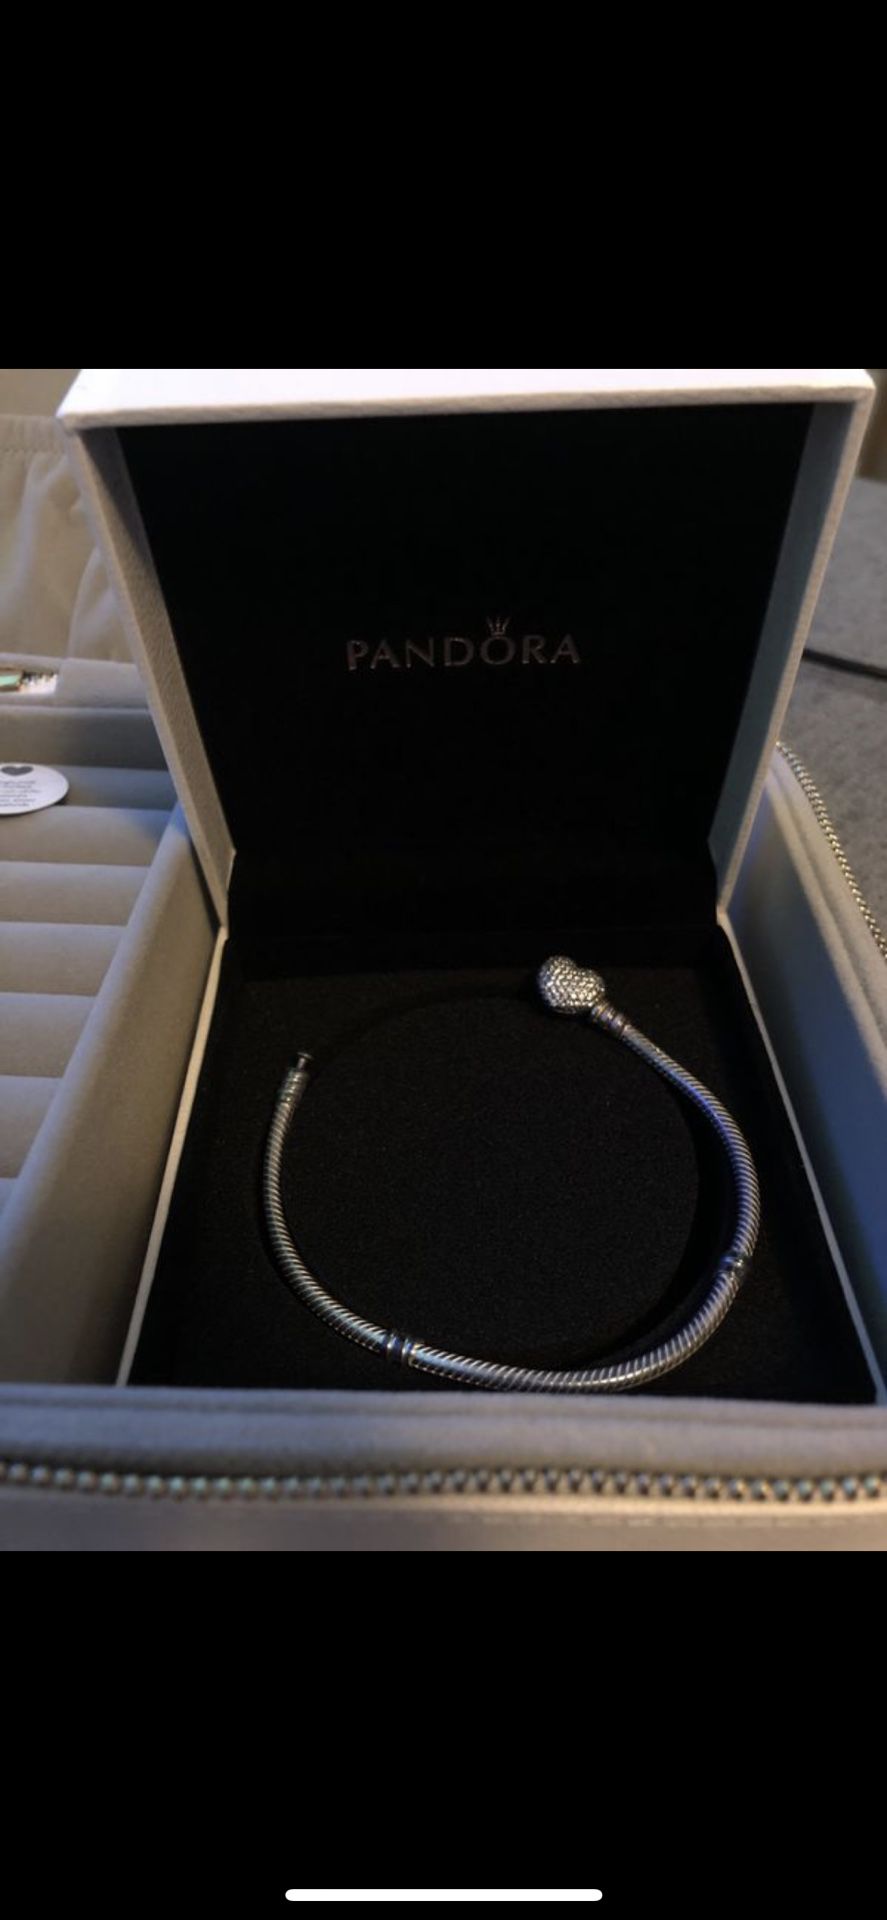 Pandora Bracelet + Eiffel Tower Charm and Carry Box